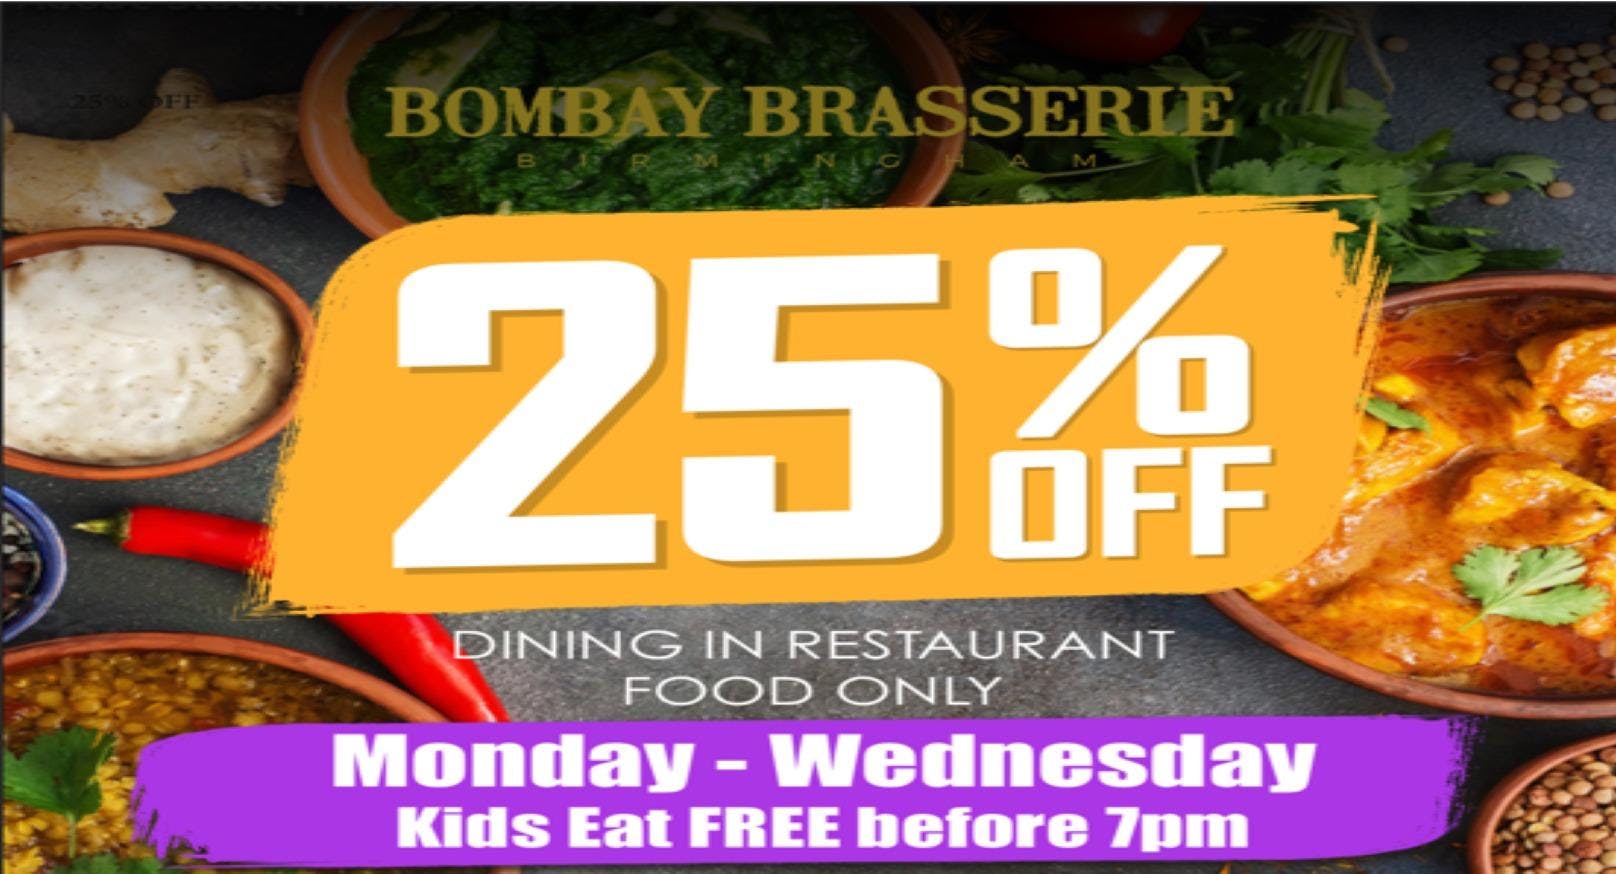 Photo of restaurant Bombay Brasserie - Birmingham in Acocks Green, Birmingham